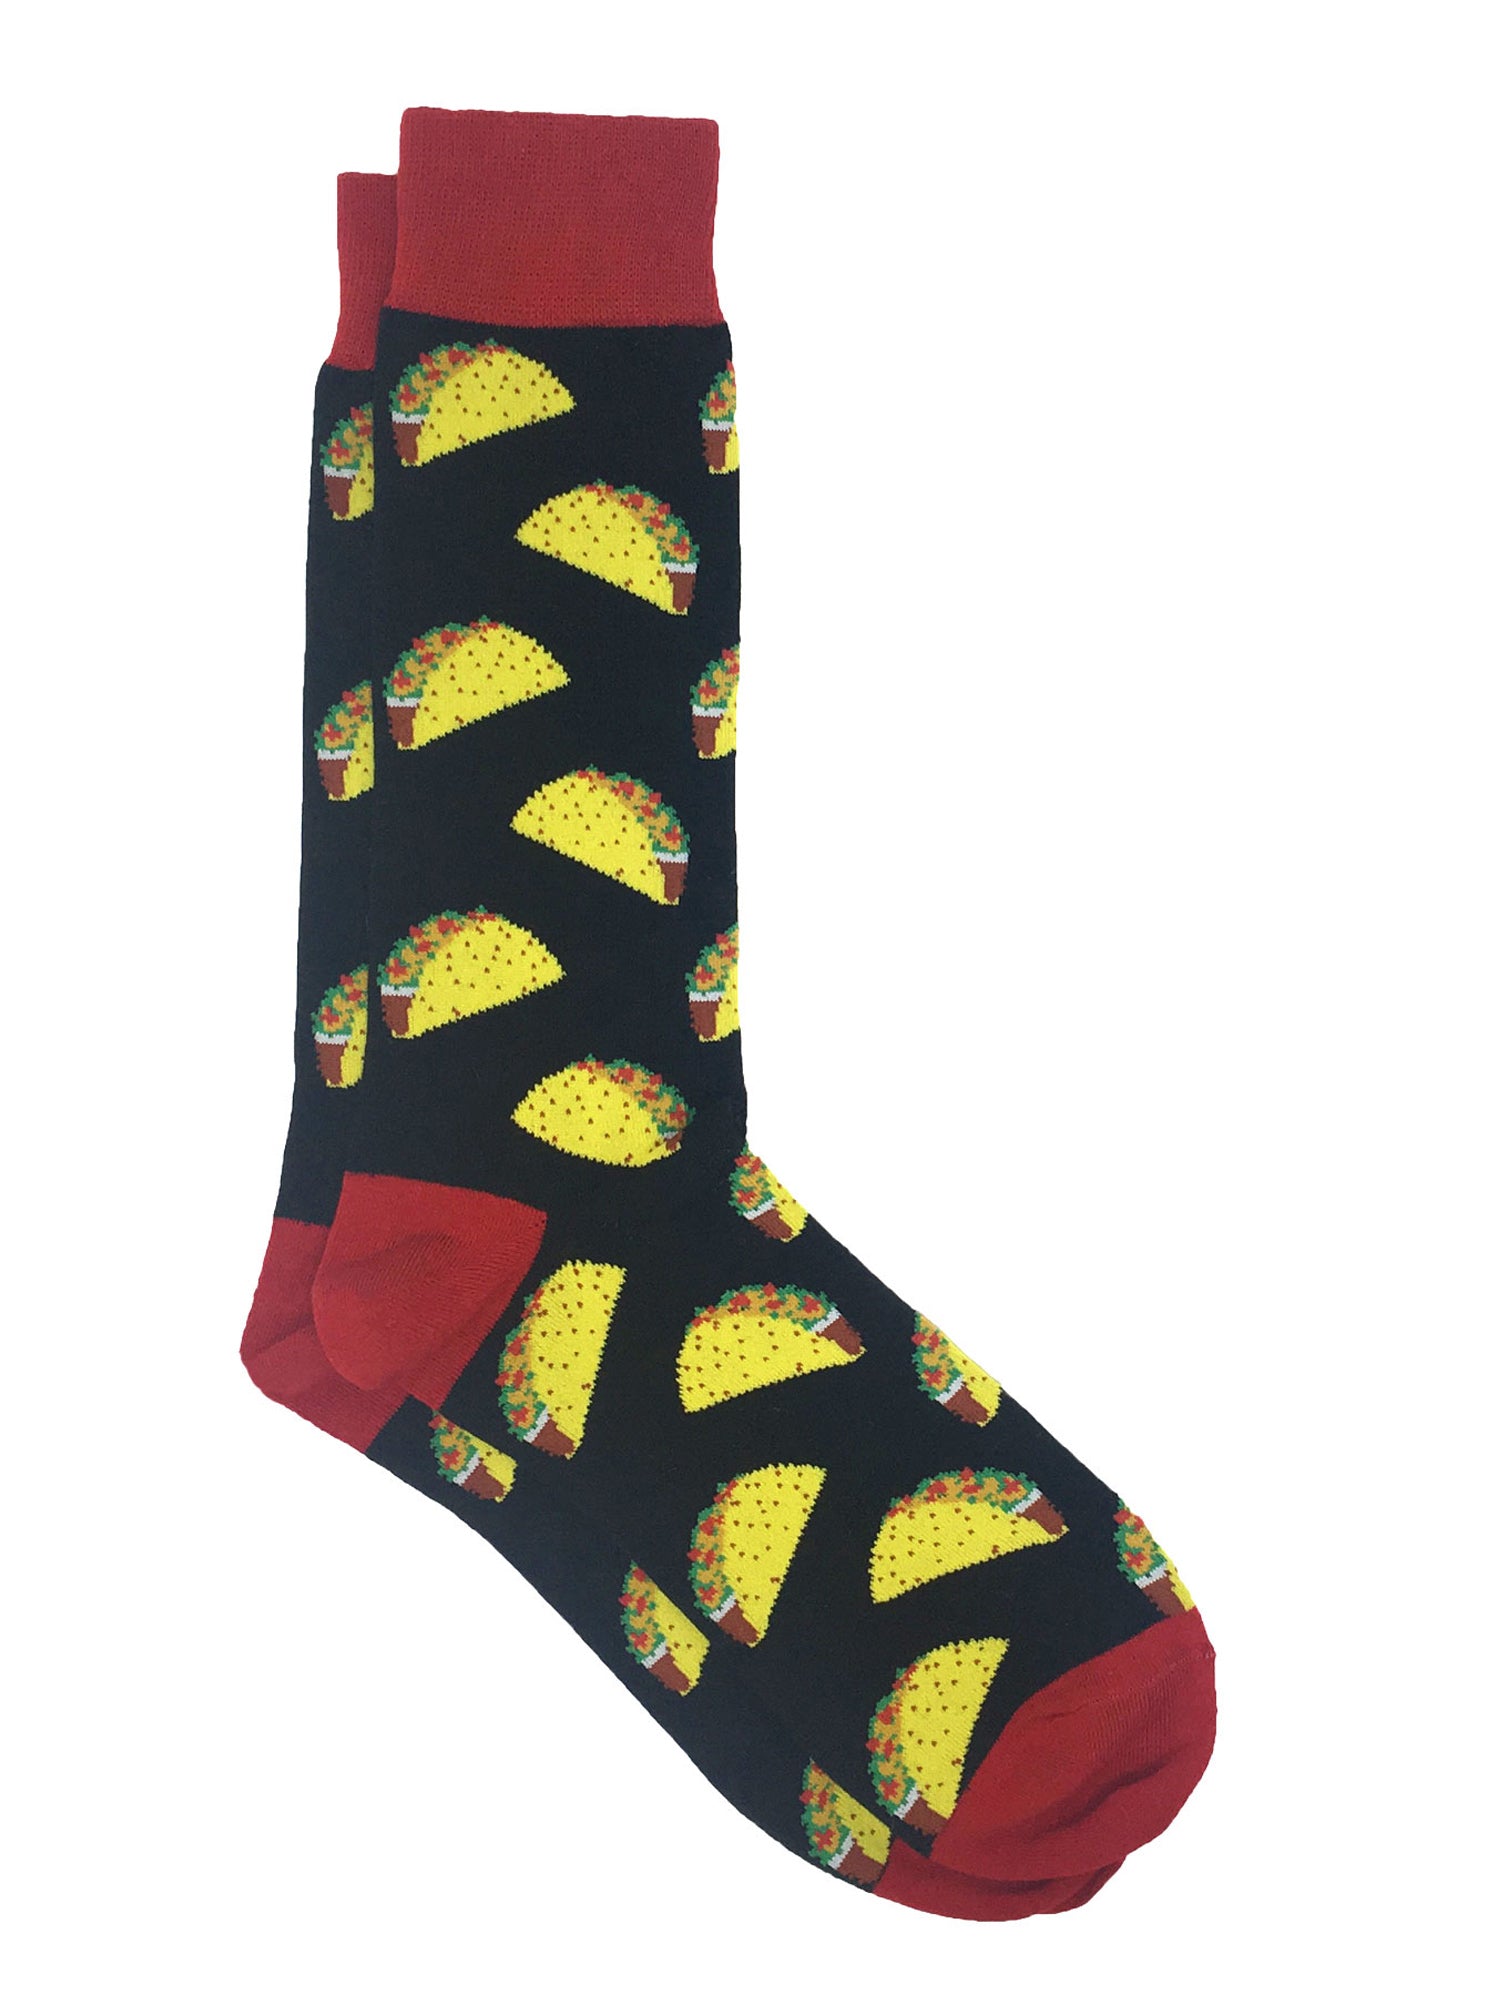 Men's Best Dad Ever Socks Grey and All-Over Tacos Food Print Novelty Socks